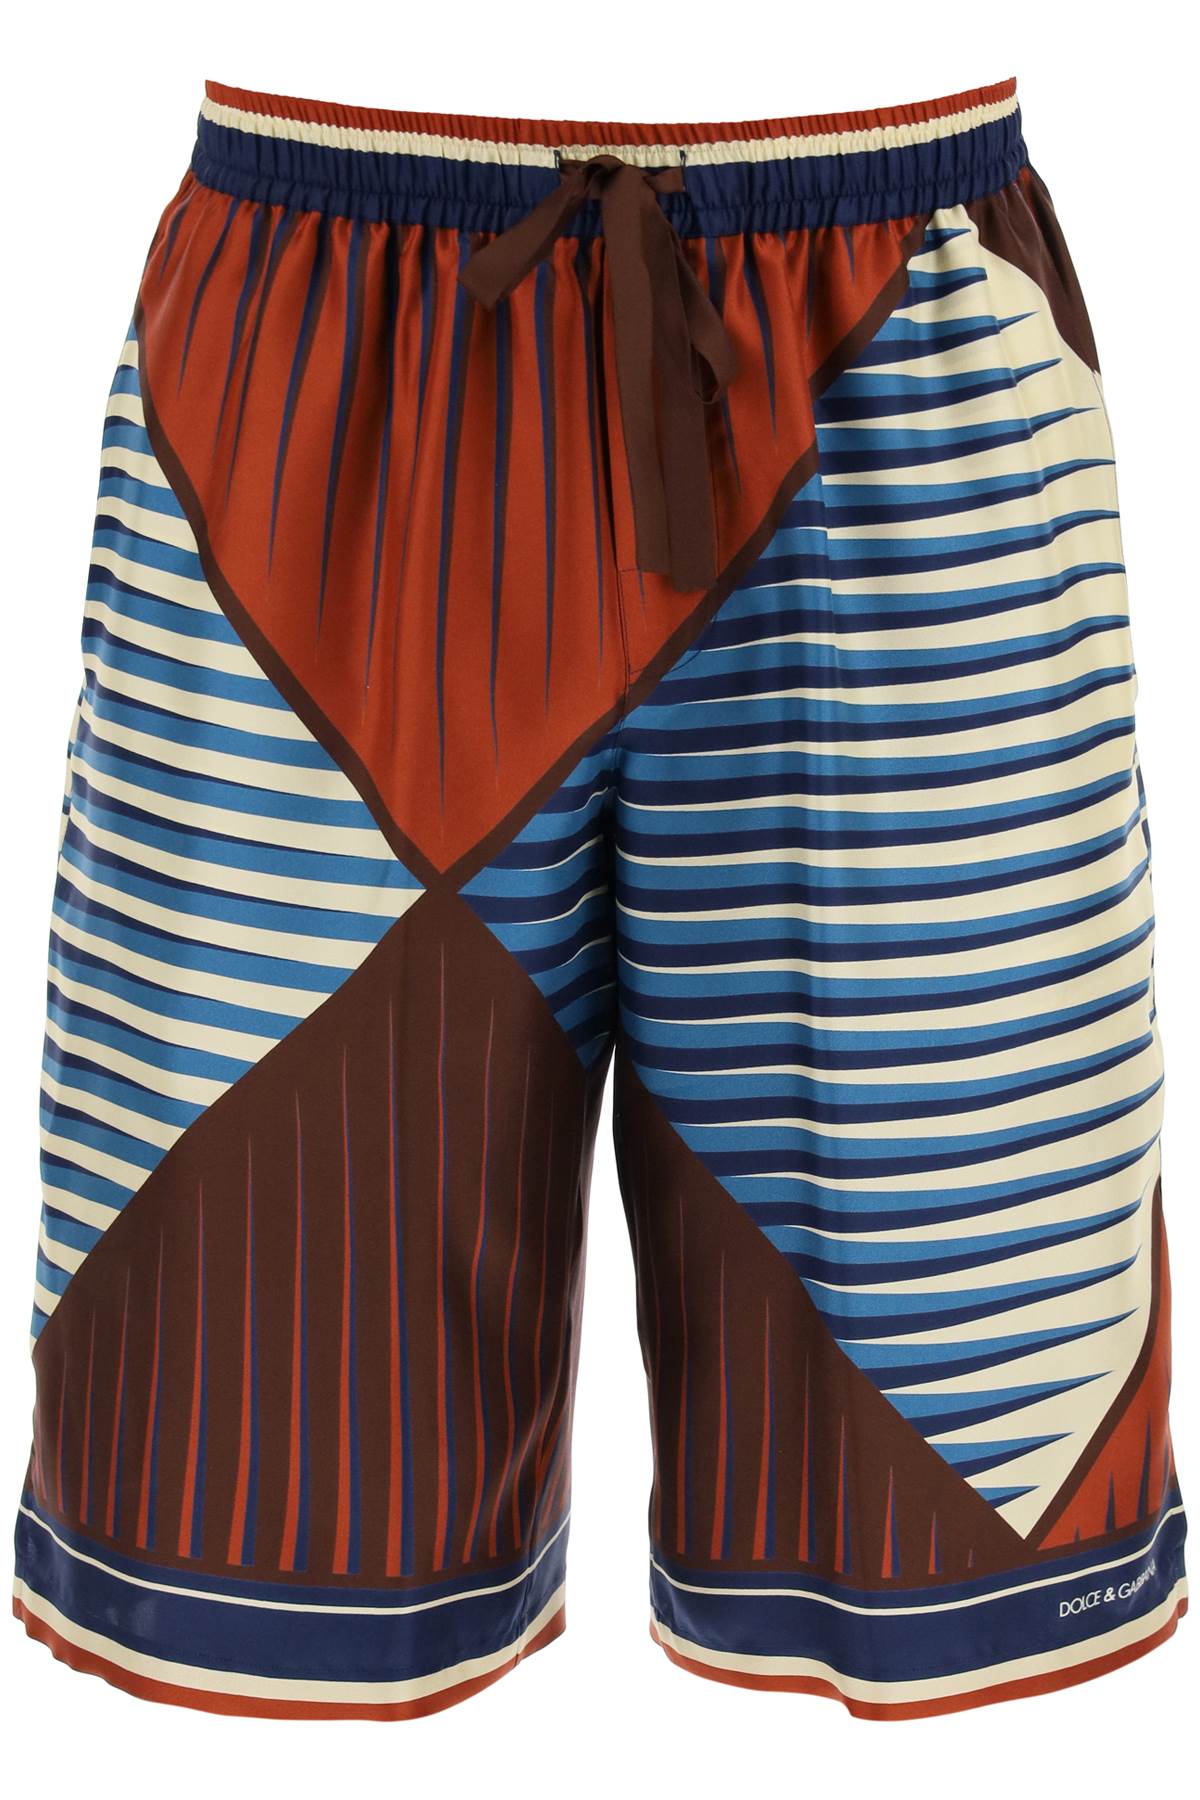 Dolce & gabbana printed silk bermuda shorts set-0